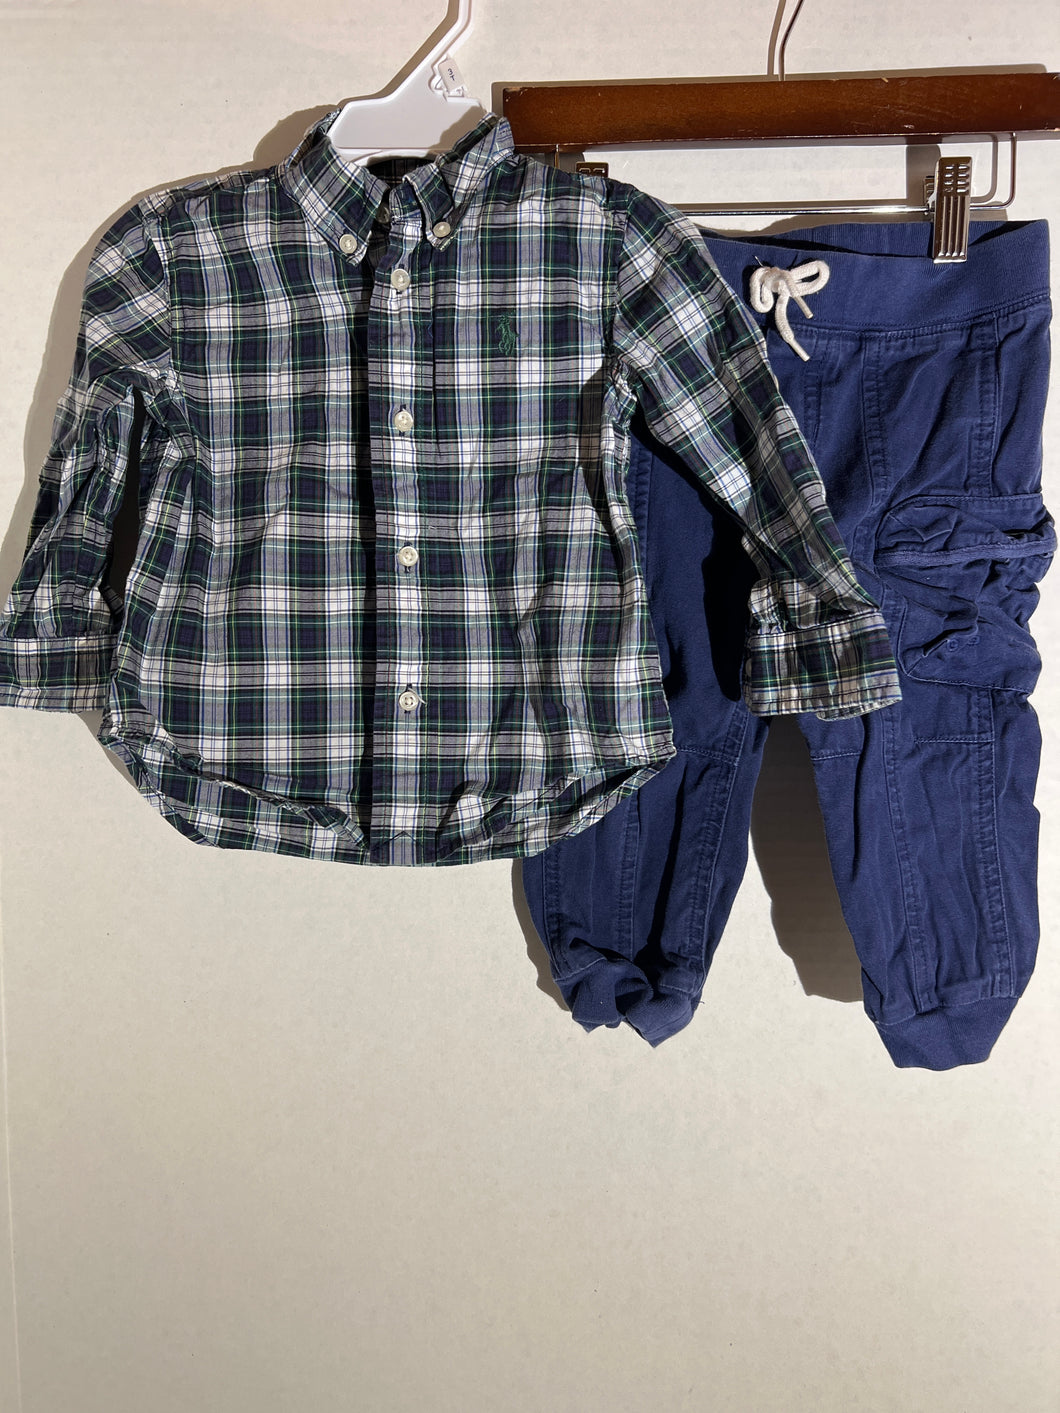 Ralph Lauren two-piece outfit green and blue plaid button up shirt with matching blue pants zipper pockets 18 months